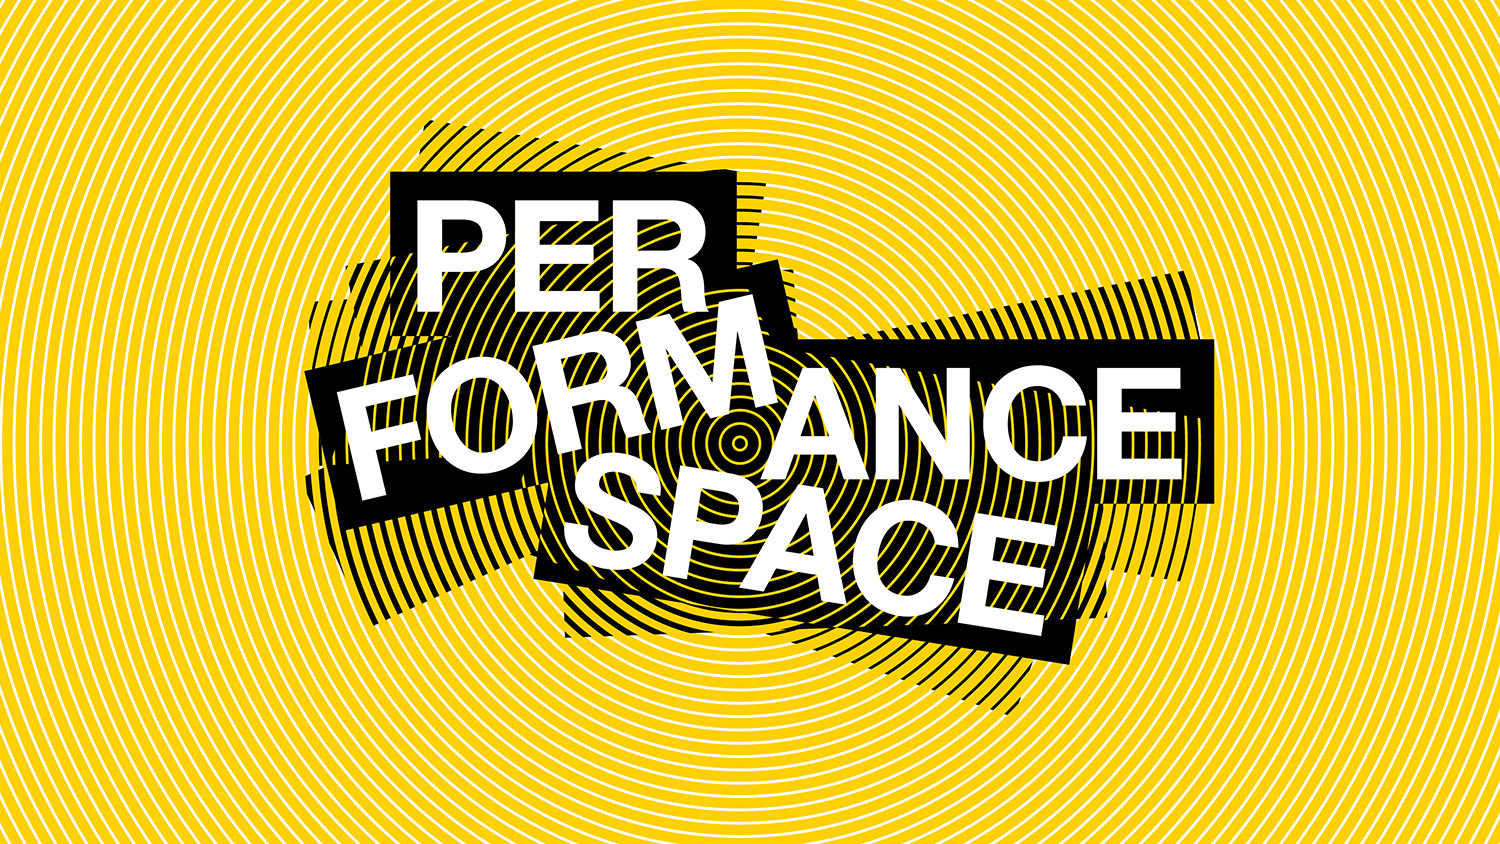 Performance Space Rebrand, 2013